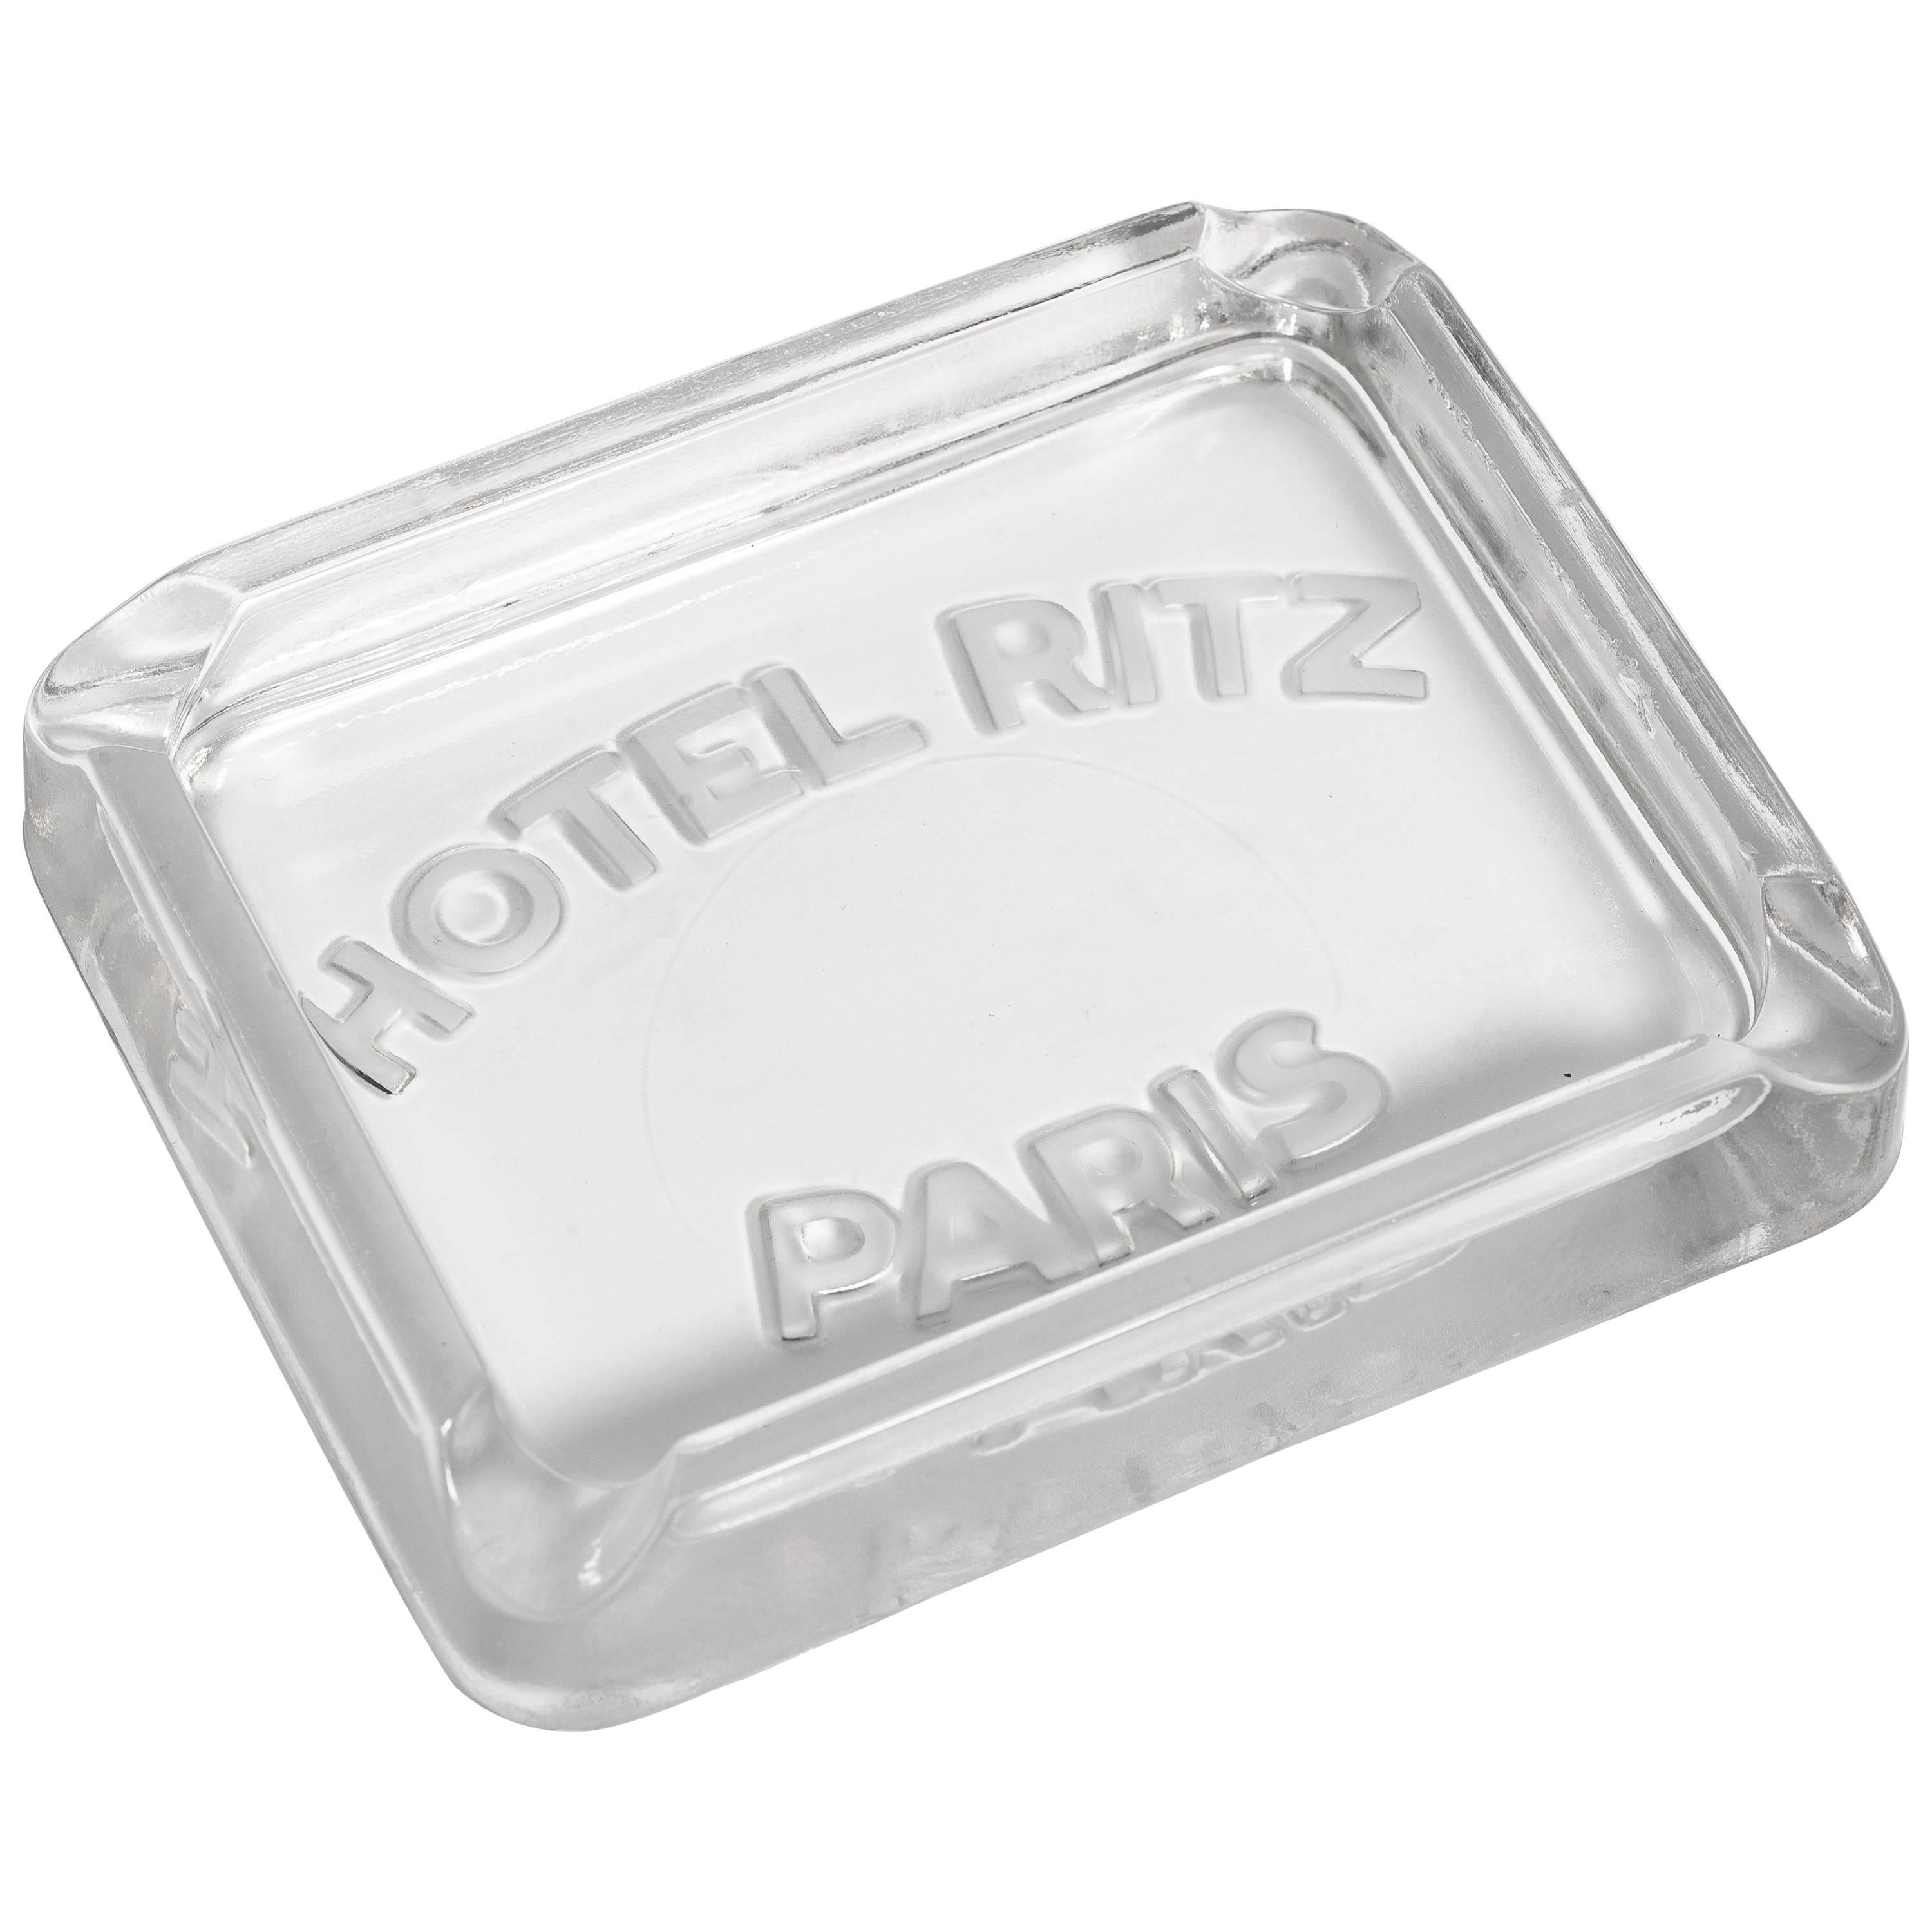 Stolen from the Hotel Ritz Paris Art Deco Glass Ashtray